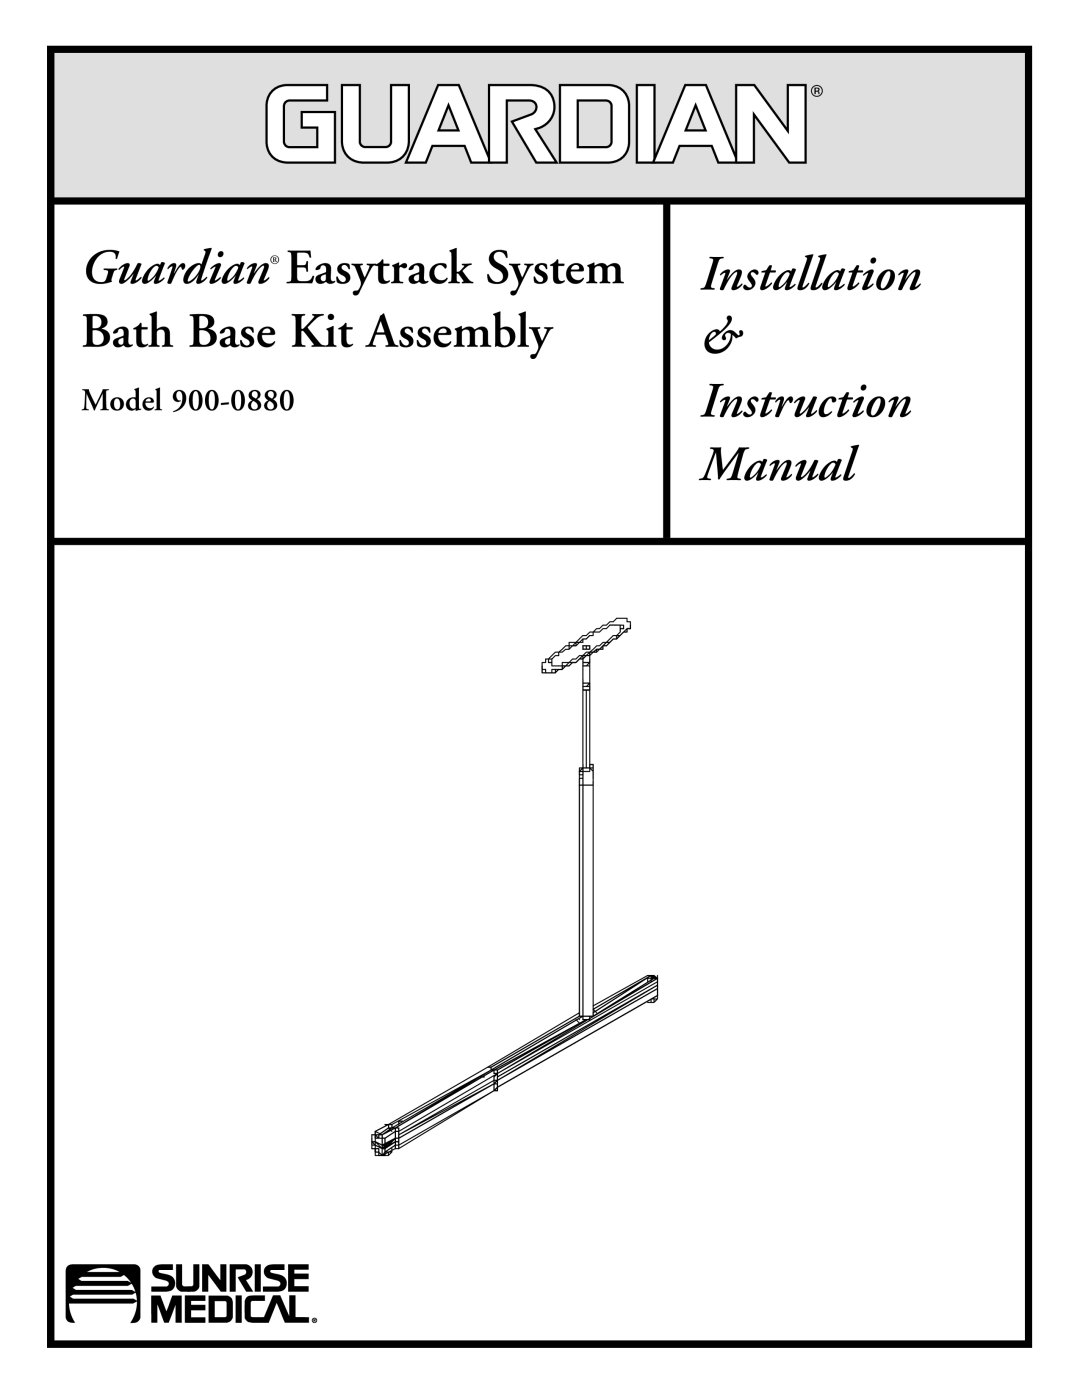 Sunrise Medical 900-0880 instruction manual Installation, Guardian Easytrack System Bath Base Kit Assembly, Model 